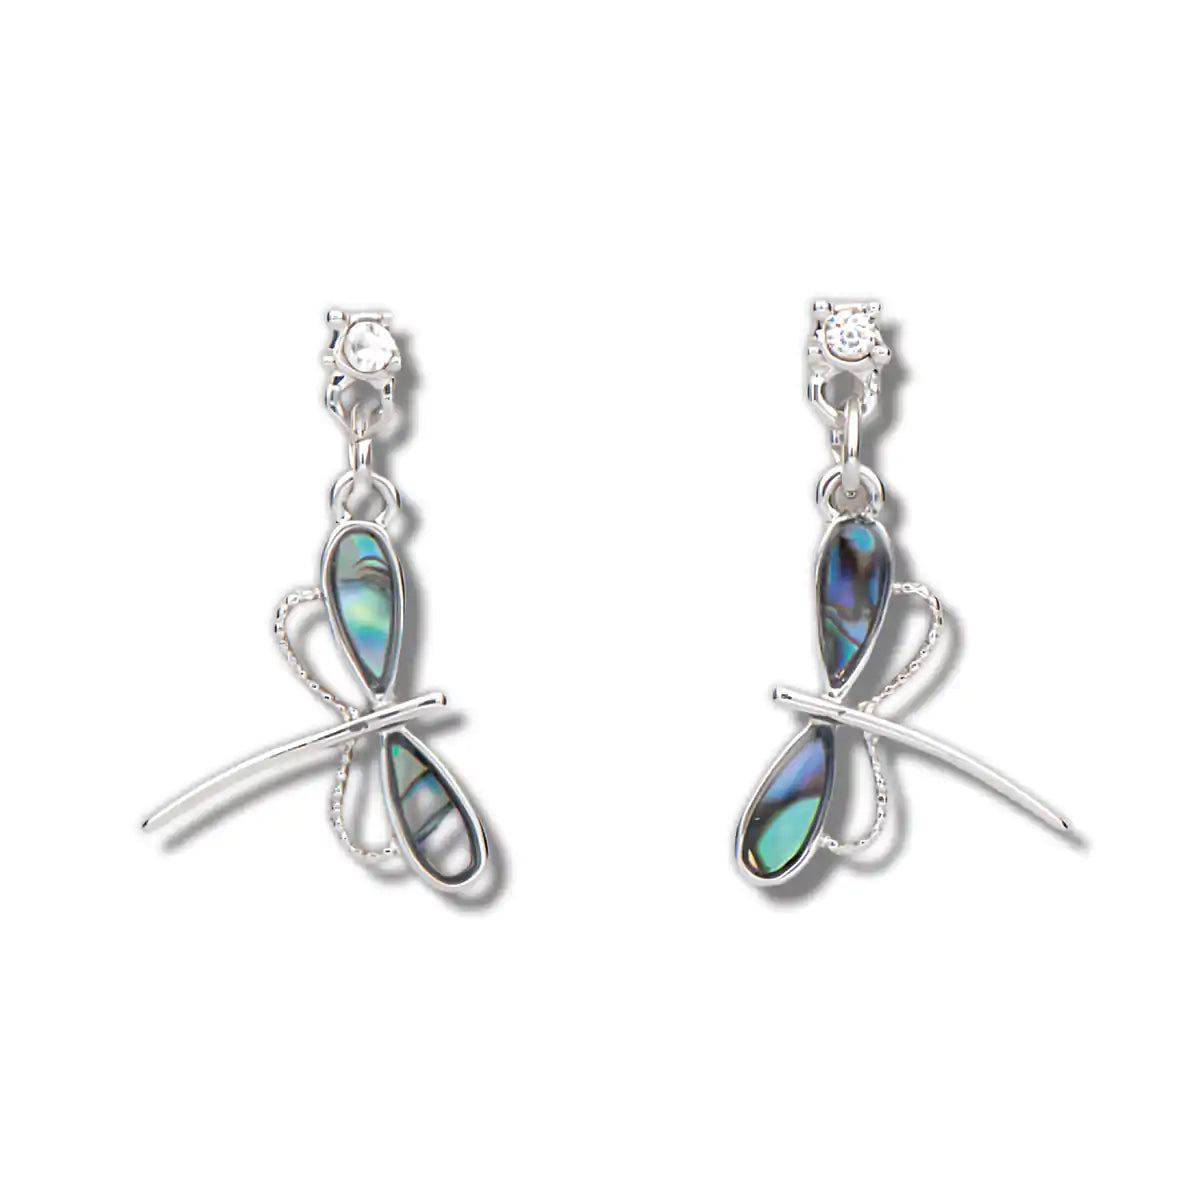 Glacier pearle delicate dragonfly earrings